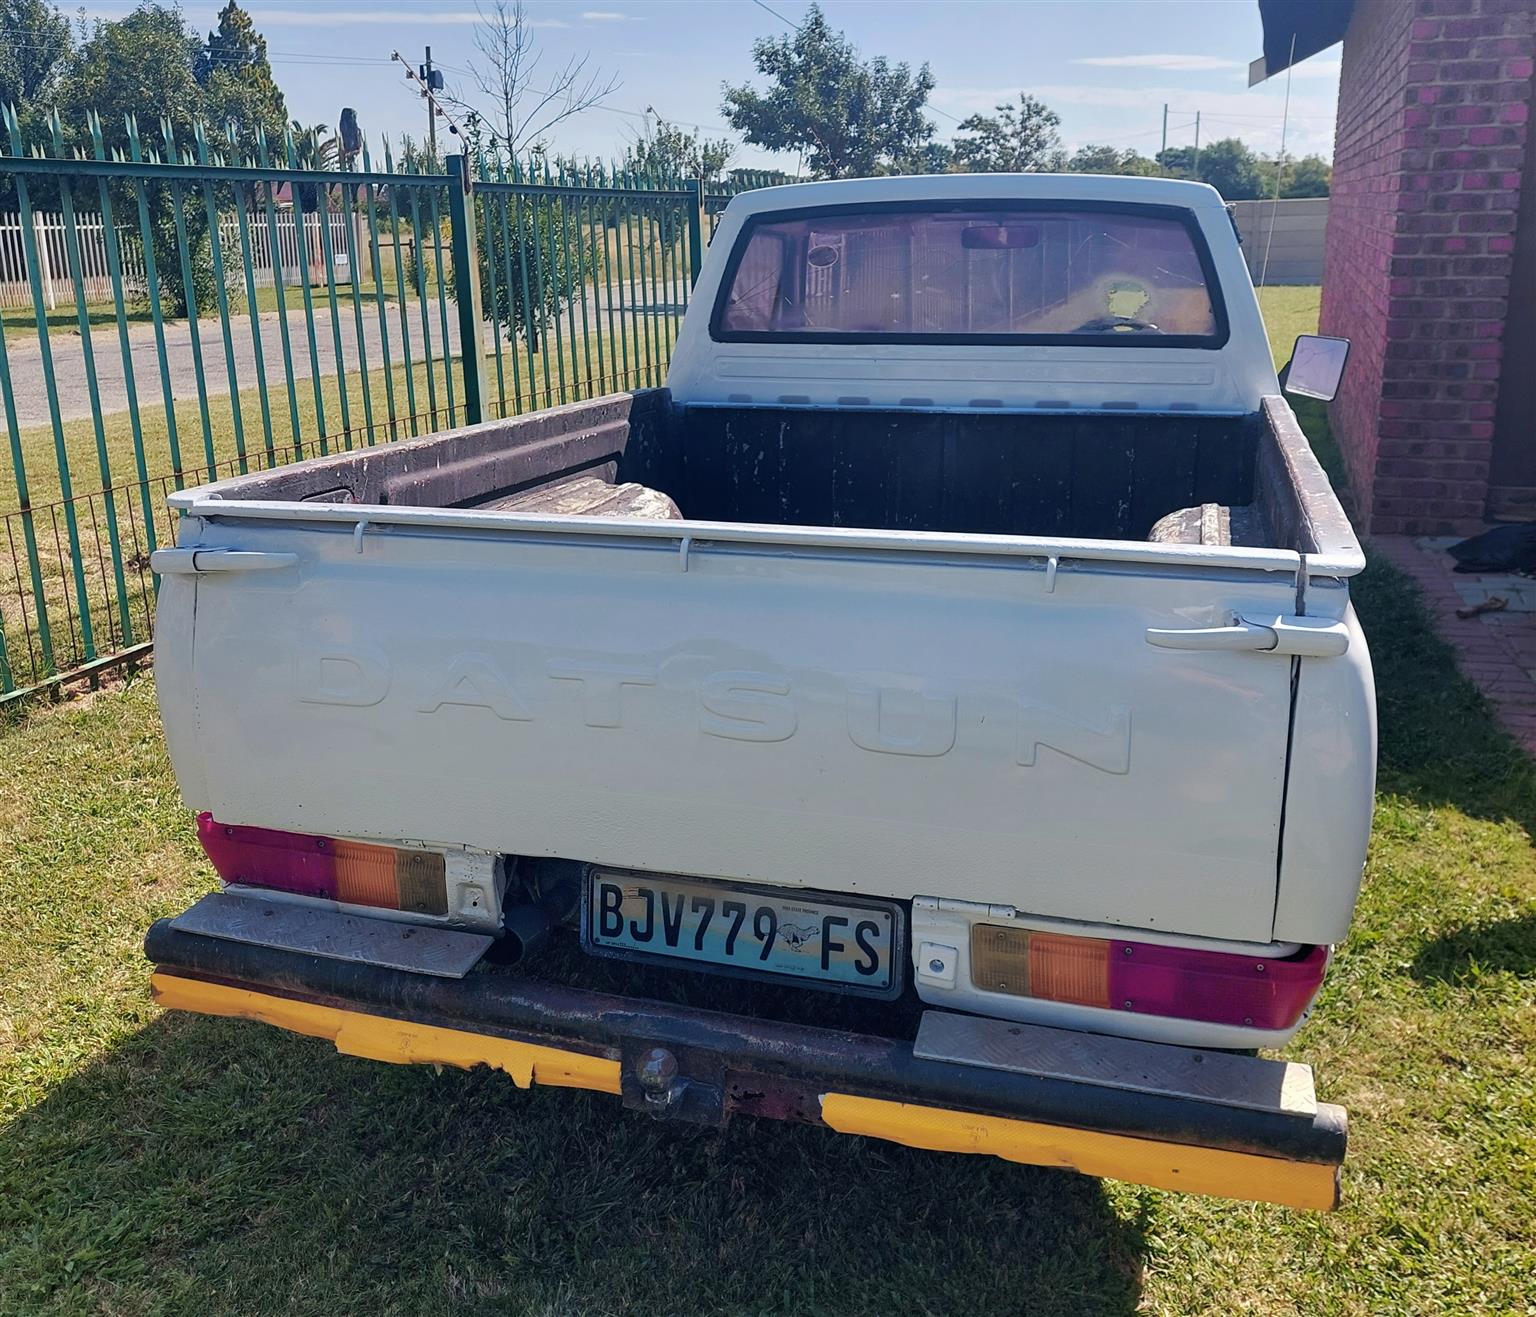 Datsun 1800 bakkie,white,1990 year model, manual transmission, petrol